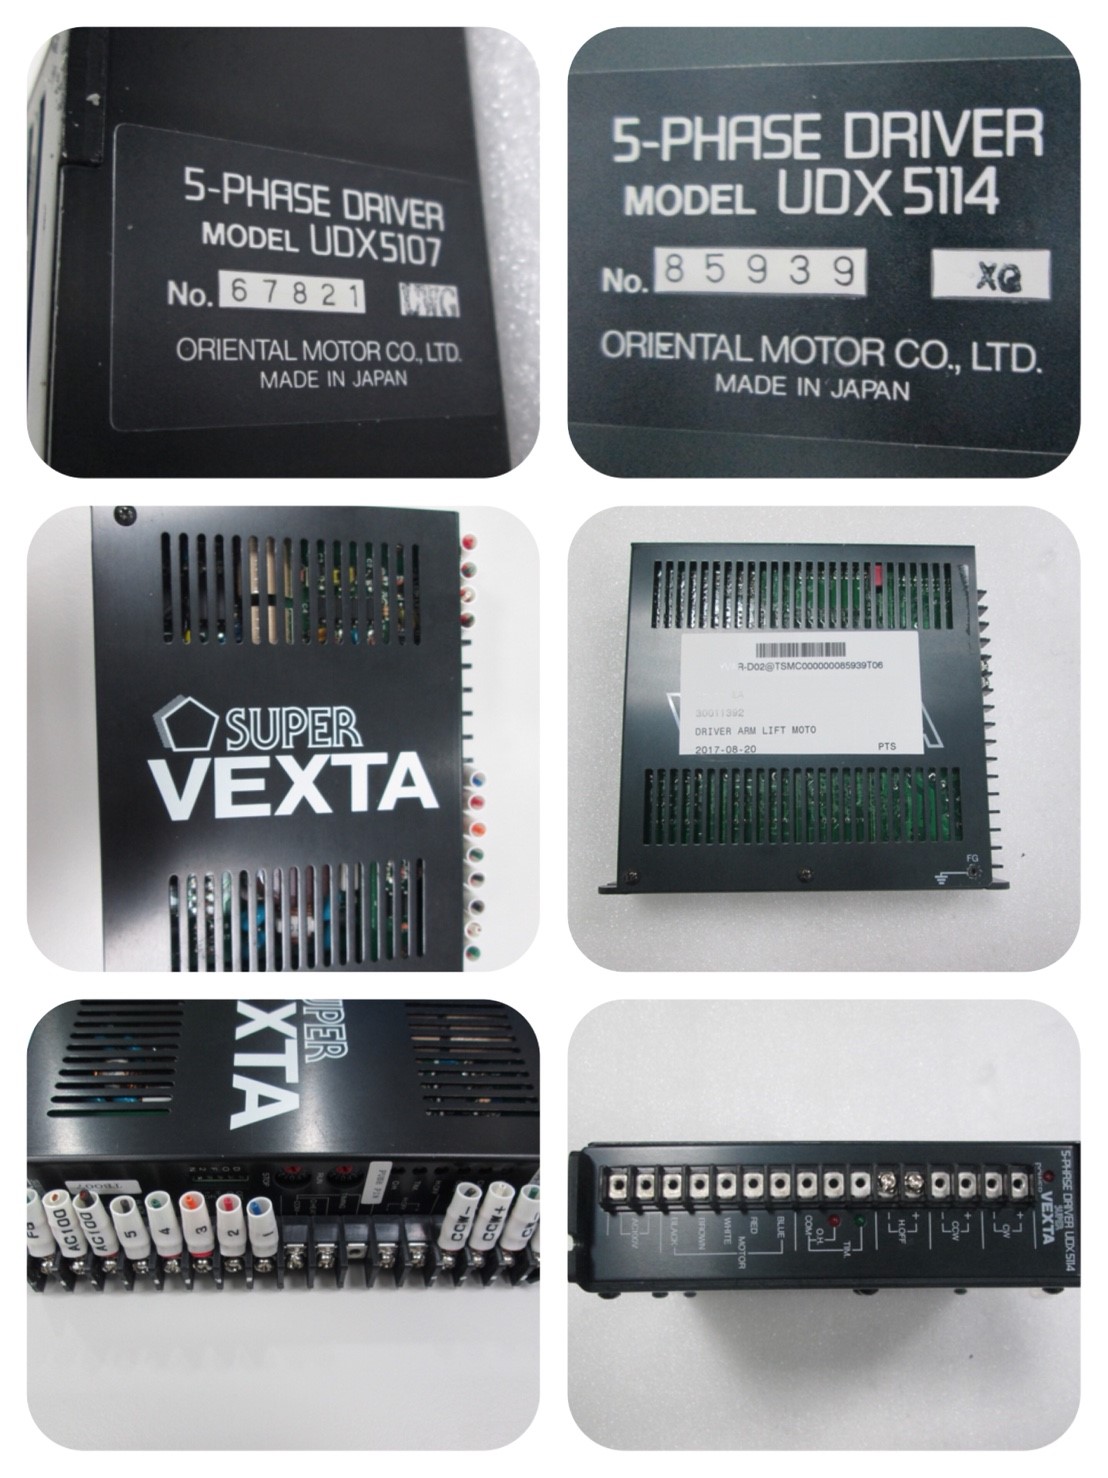 /archive/product/item/images/維修項目/DRIVER/2-VEXTA/Vexta Driver_180830_0018.jpg